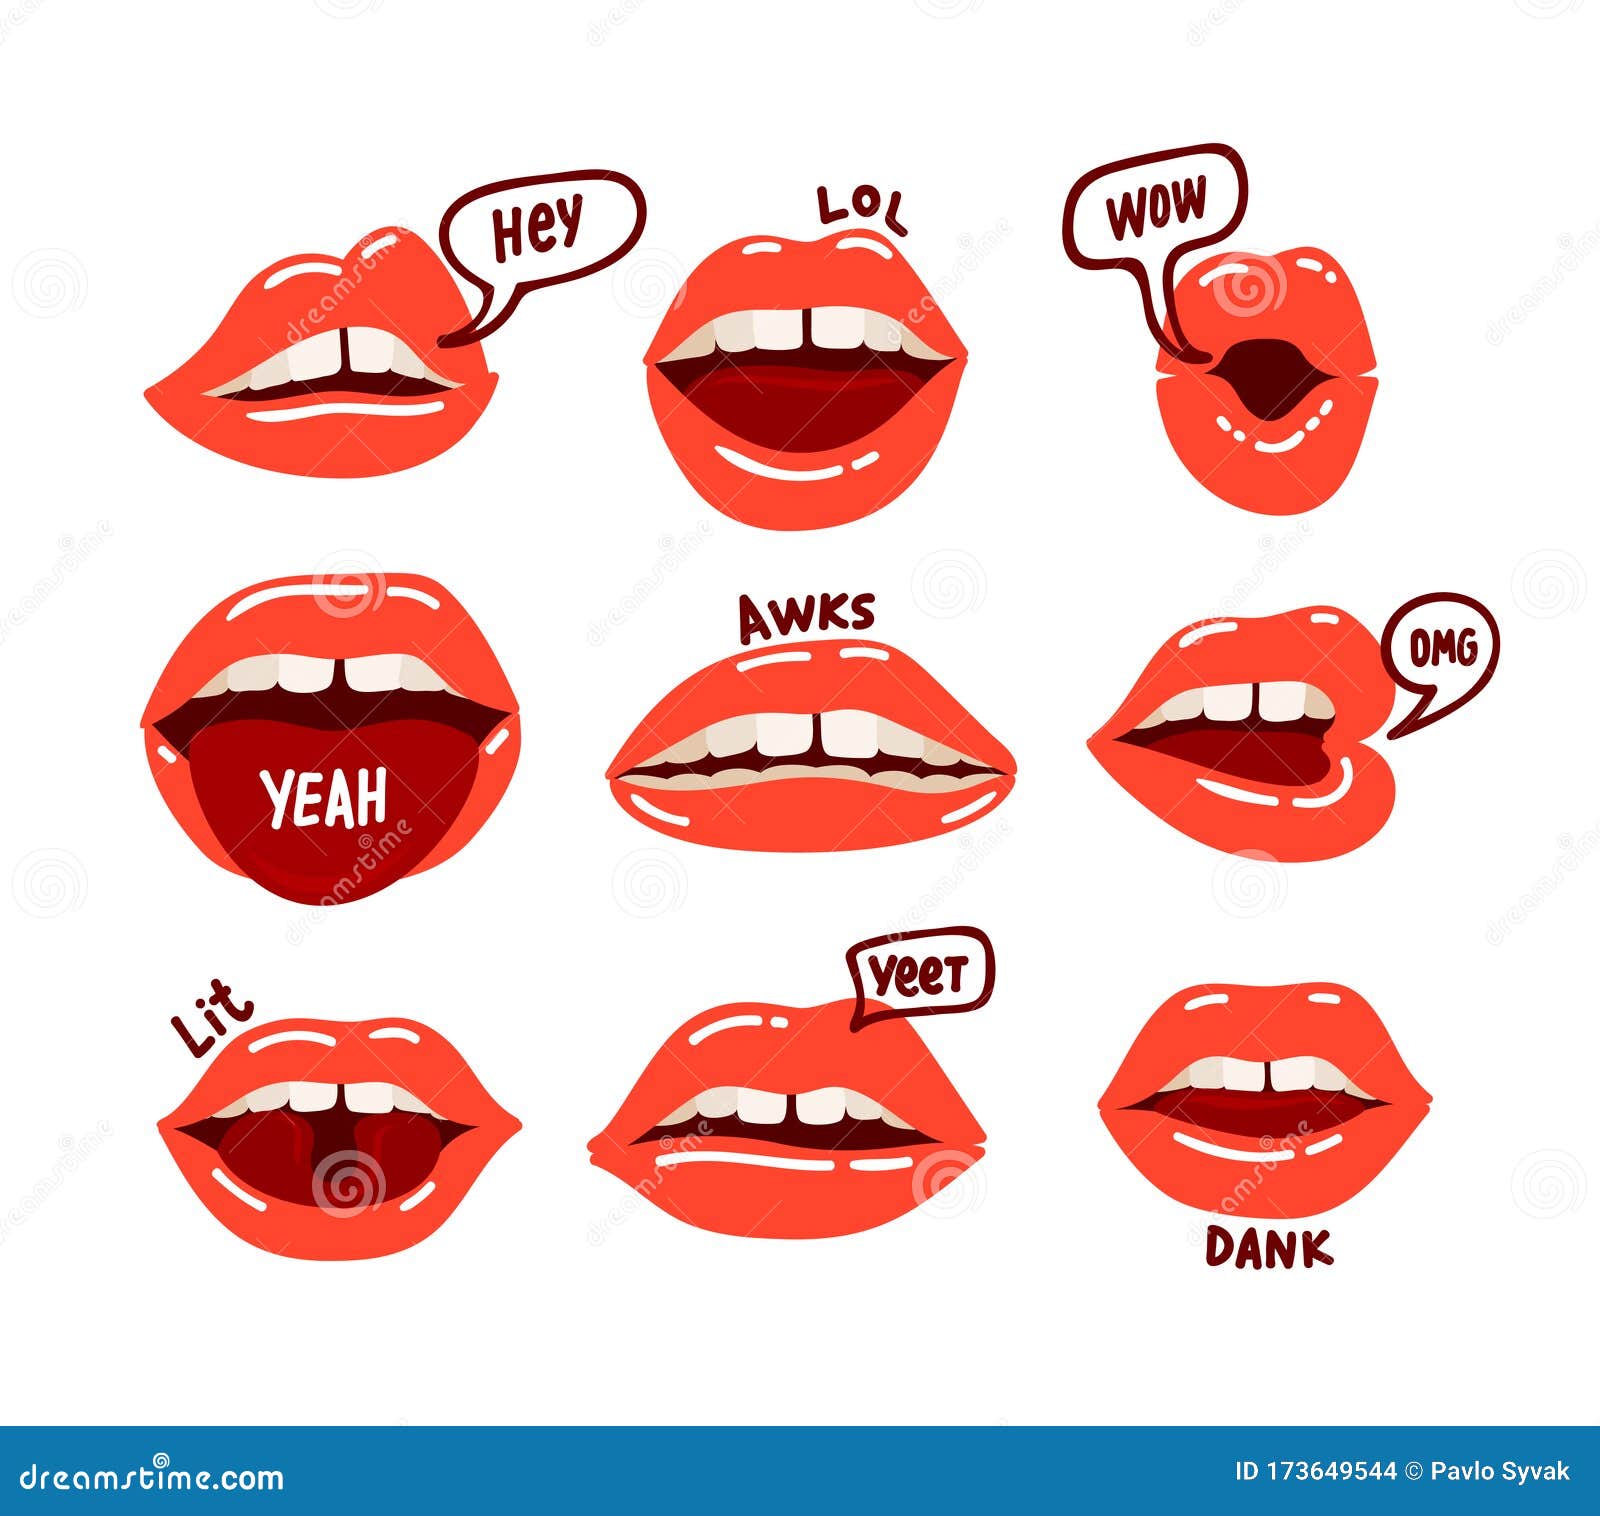 How do i tongue kiss